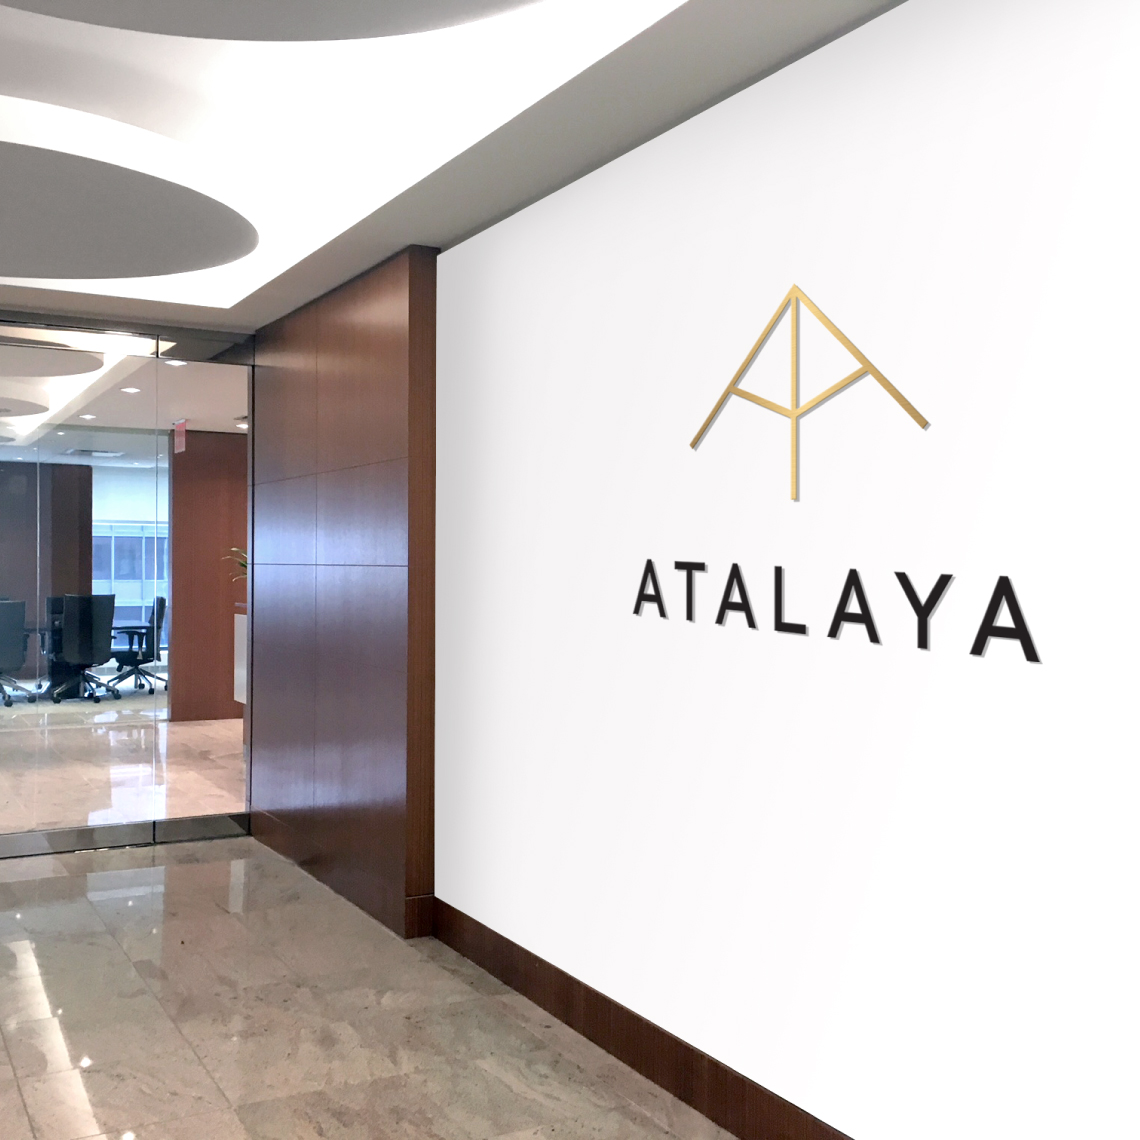 The wall of an office corridor with Atalaya's logo